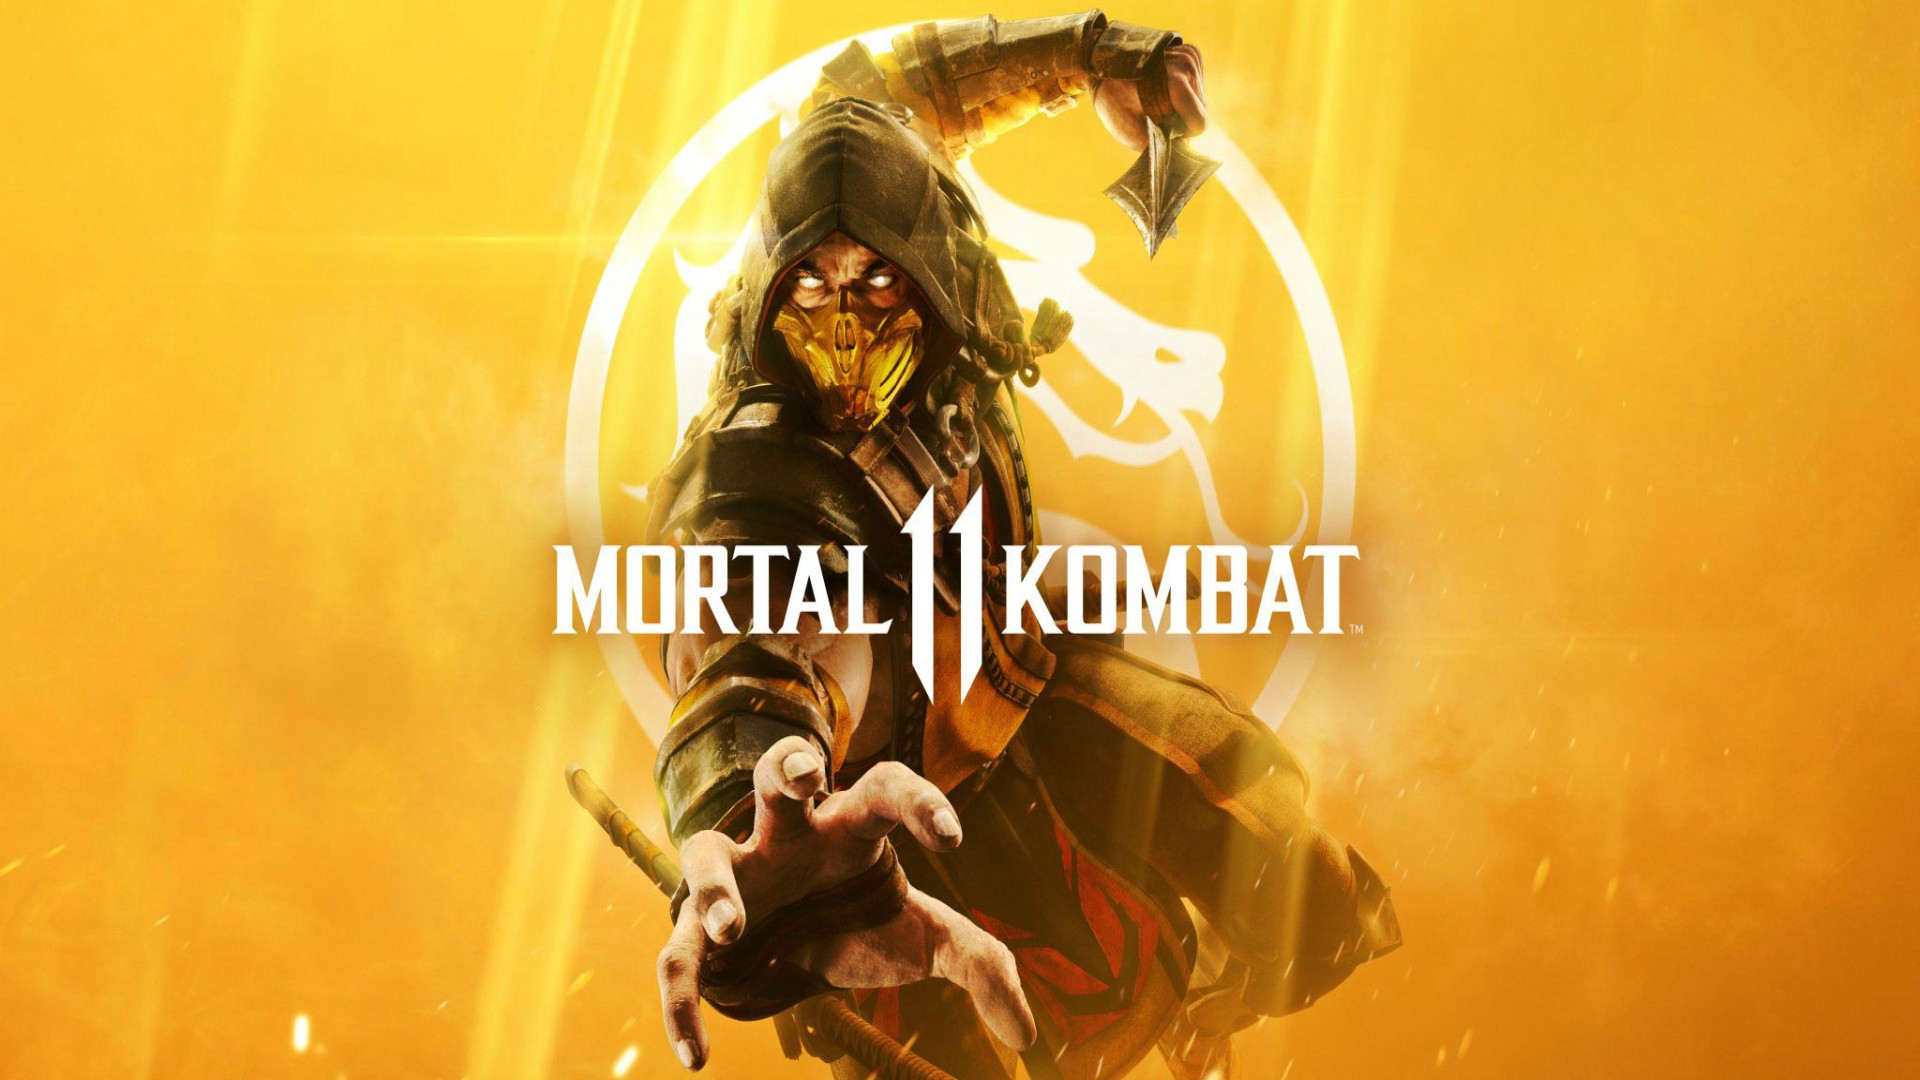 Los mejores fondos de pantalla de Mortal Kombat 11 para la pantalla del teléfono